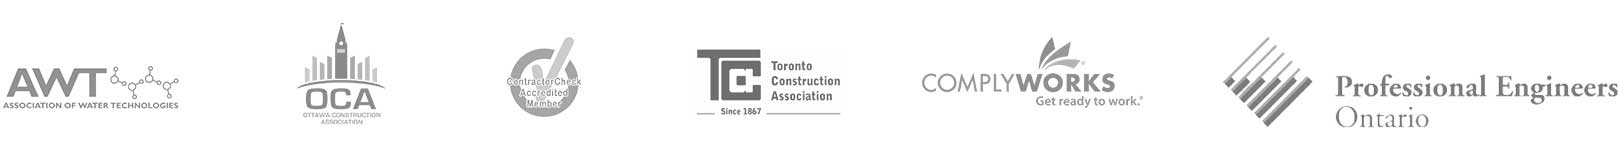 Affiliate logos - AWT Association of Water Tecnologies logo - OCA Ottawa Construction Association logo - Contractor Check Accredited Member logo - TCA Toronto Construction Association logo - Comply Works logo